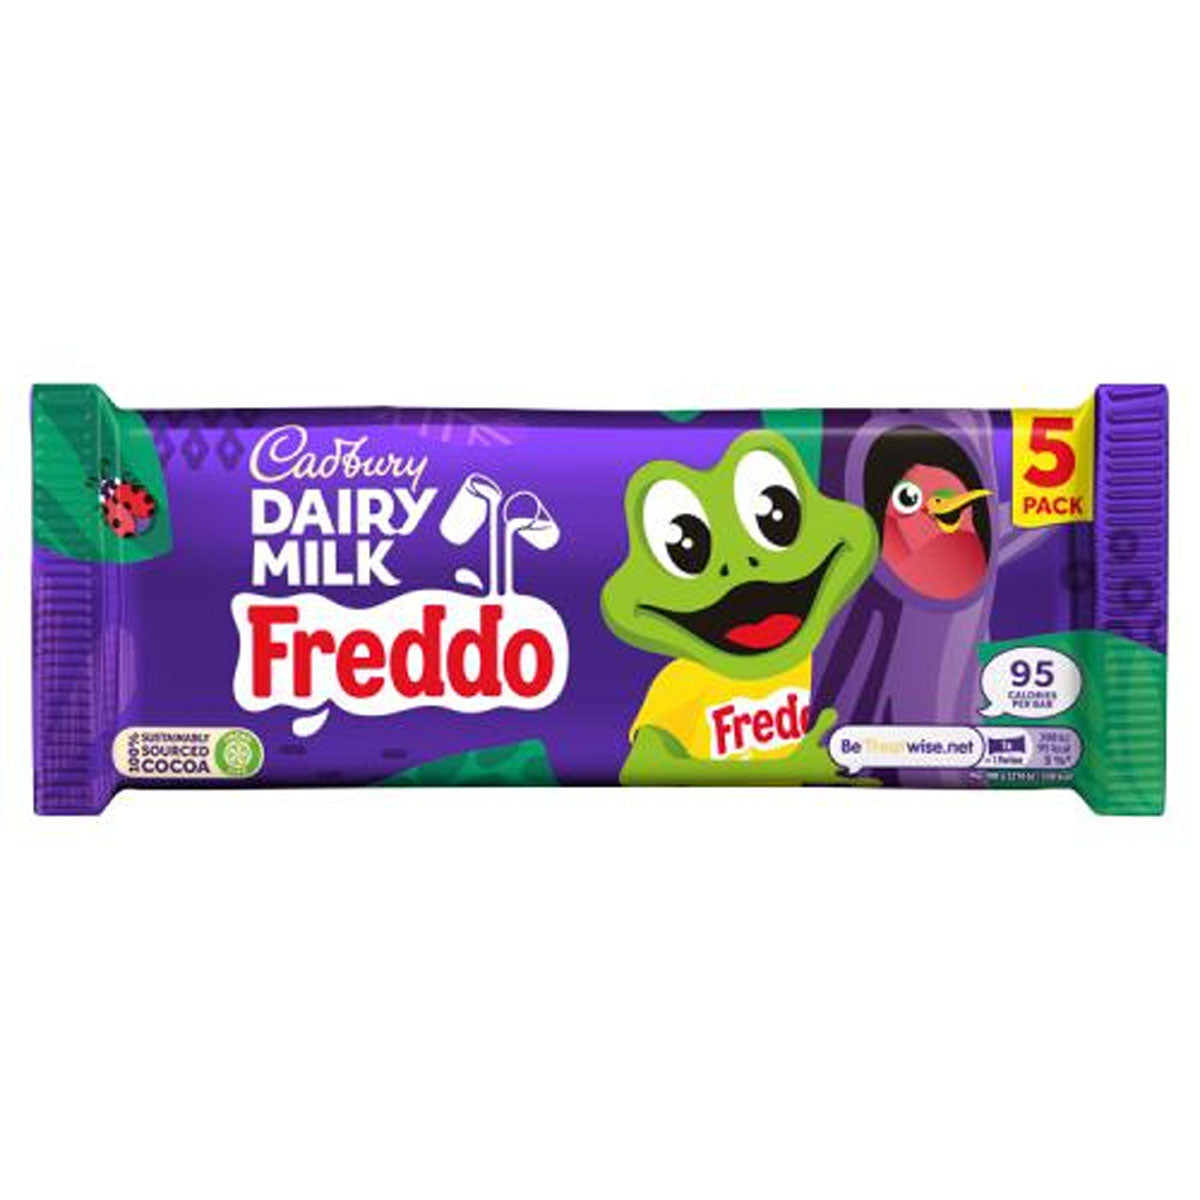 Cadbury - Dairy Milk Freddo Chocolate Bar - 5 Pack 90g